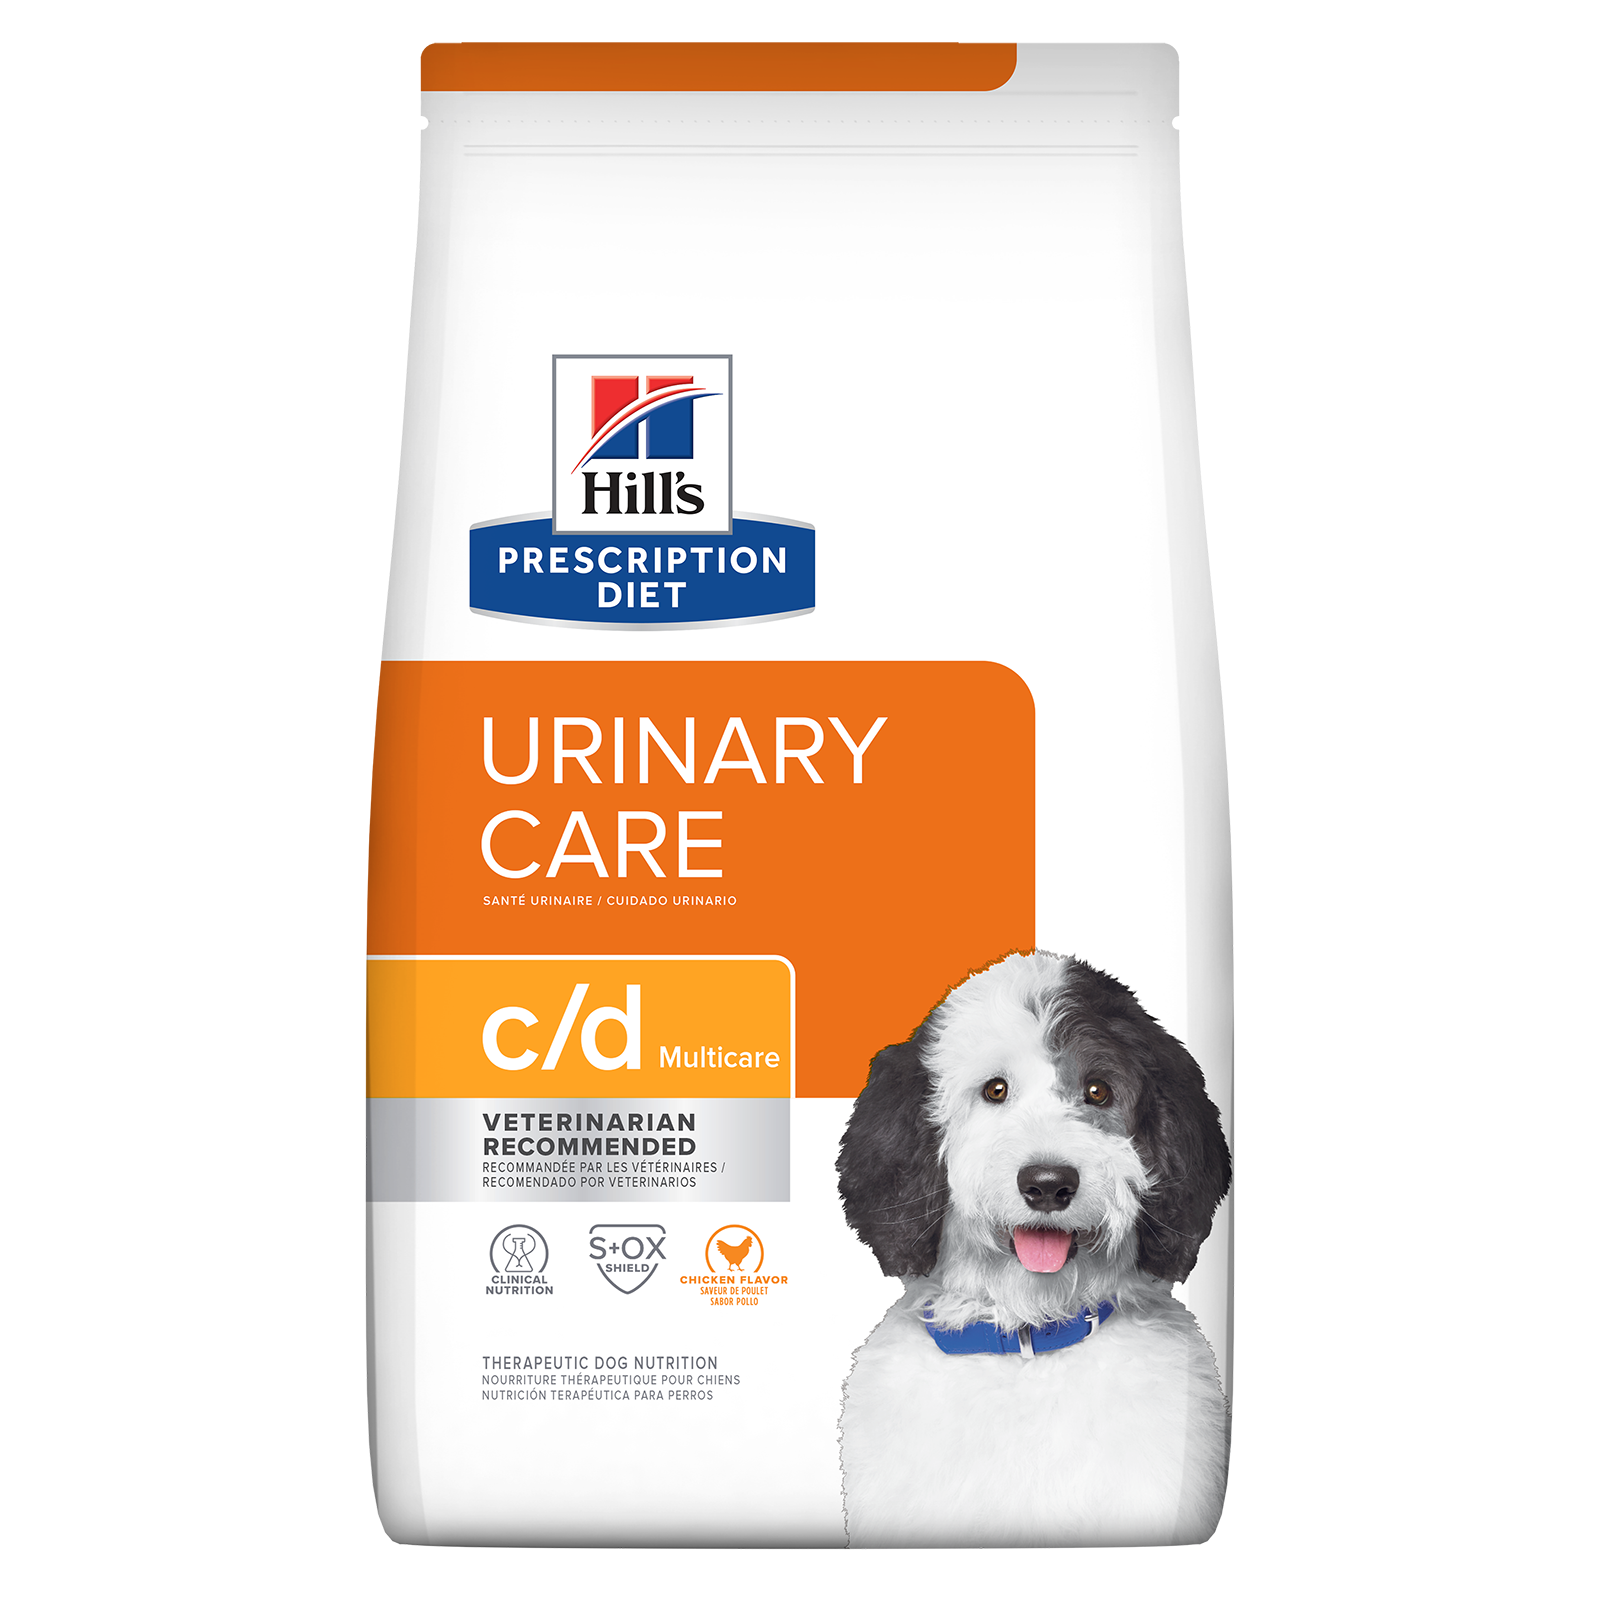 Hill's Prescription Diet Dog Food c/d Multicare Urinary Care